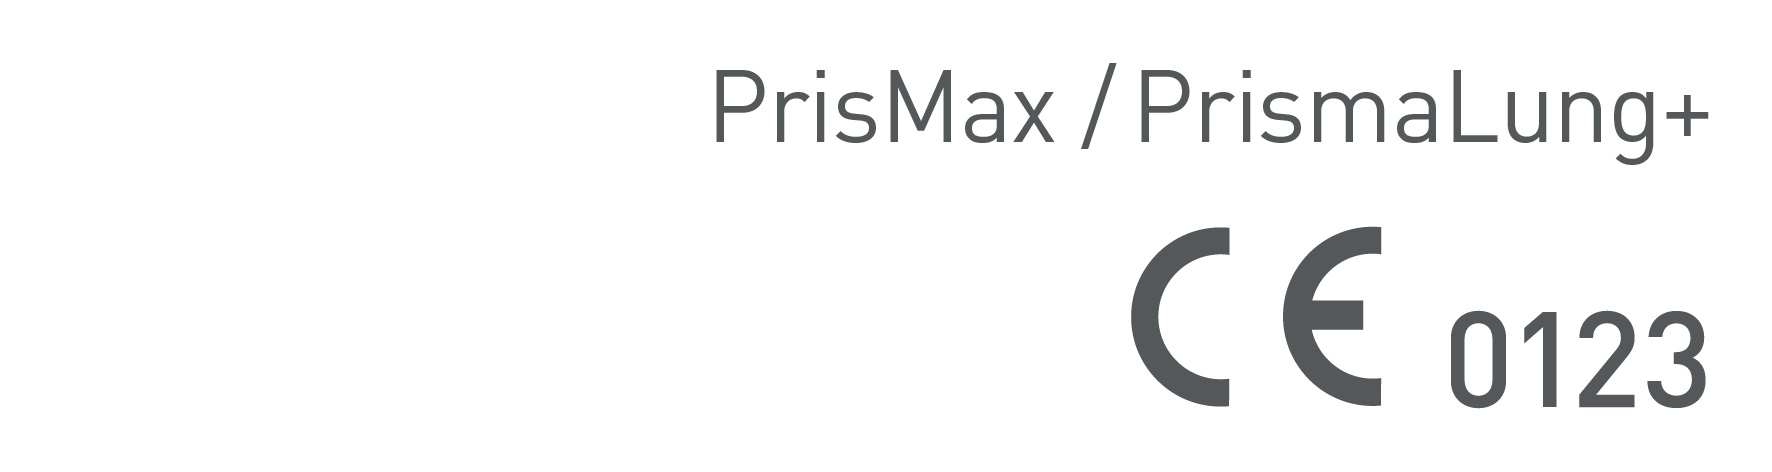 PrismaX-PRISMALUNG